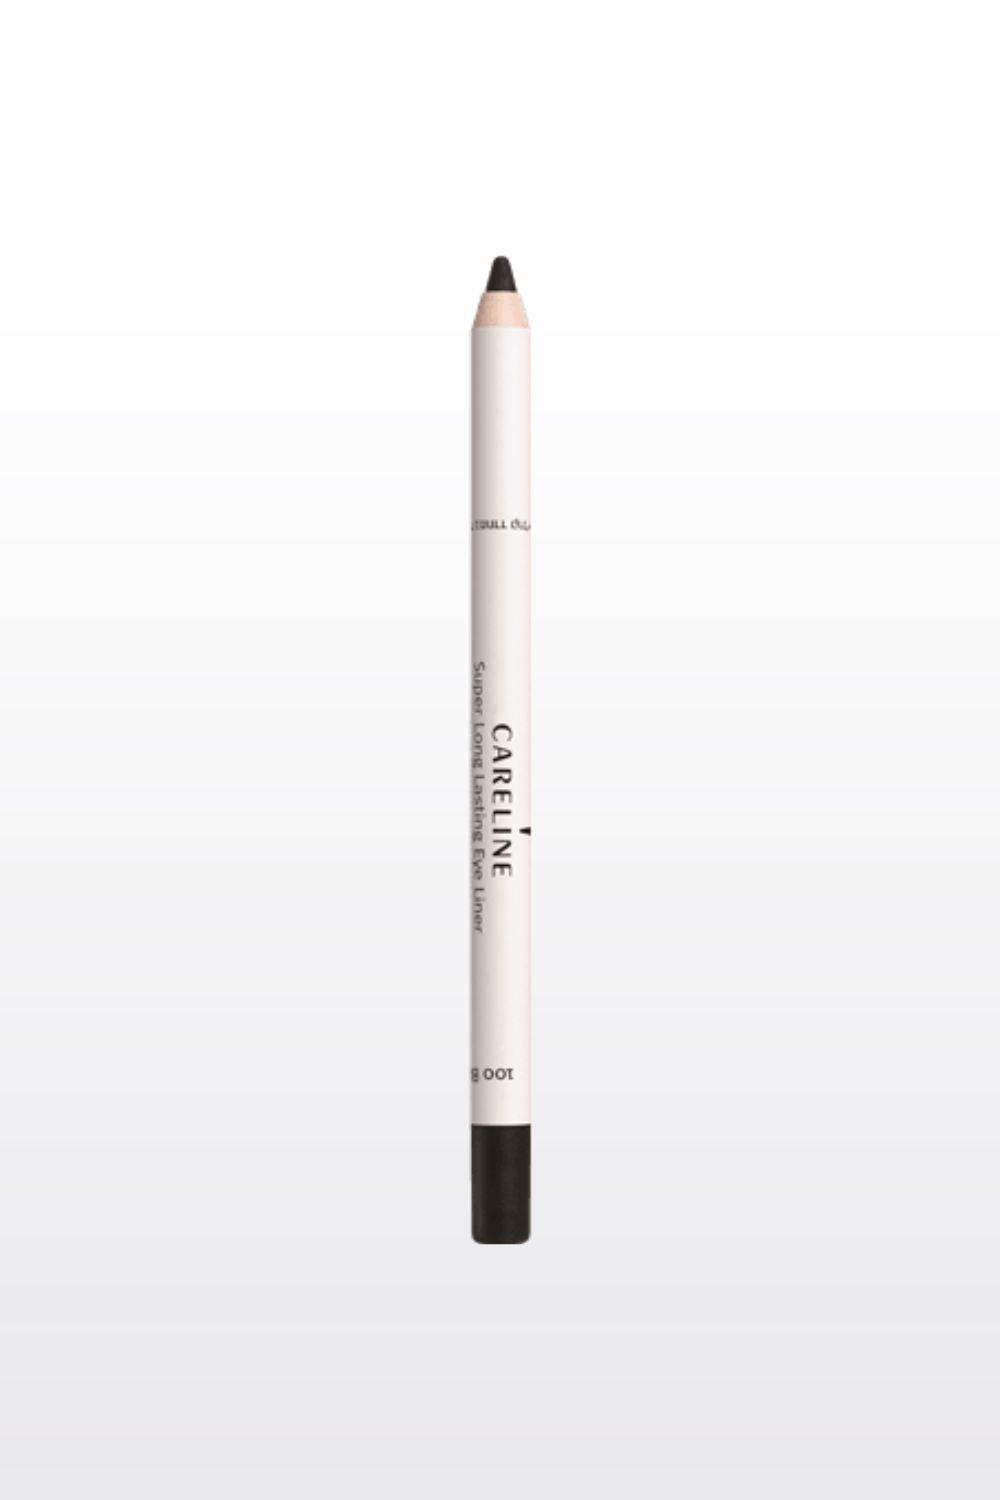 CARELINE - Long Lasting Eye Liner עפרונות עיניים עם חידוד - MASHBIR//365